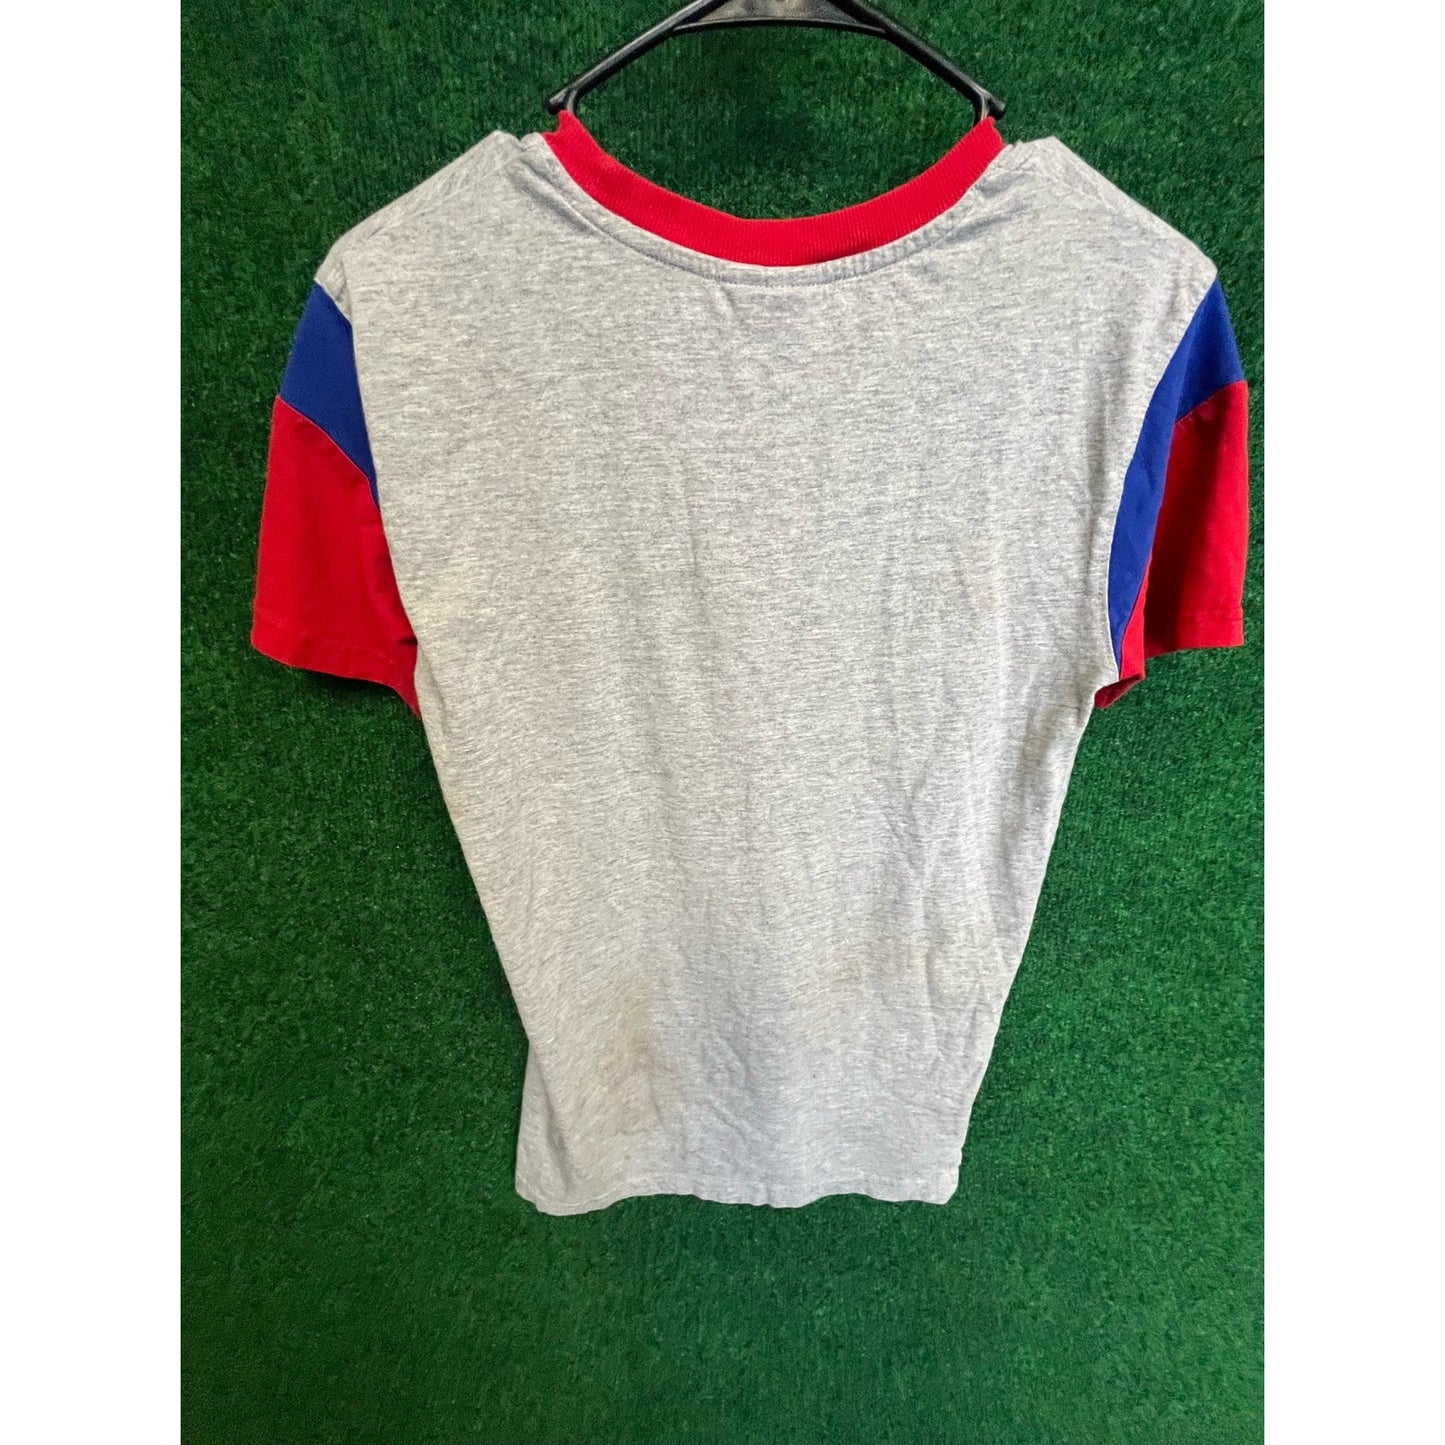 90s Philadelphia Phillies Youth T-Shirt 2 Tone Sz Large Gray & Red